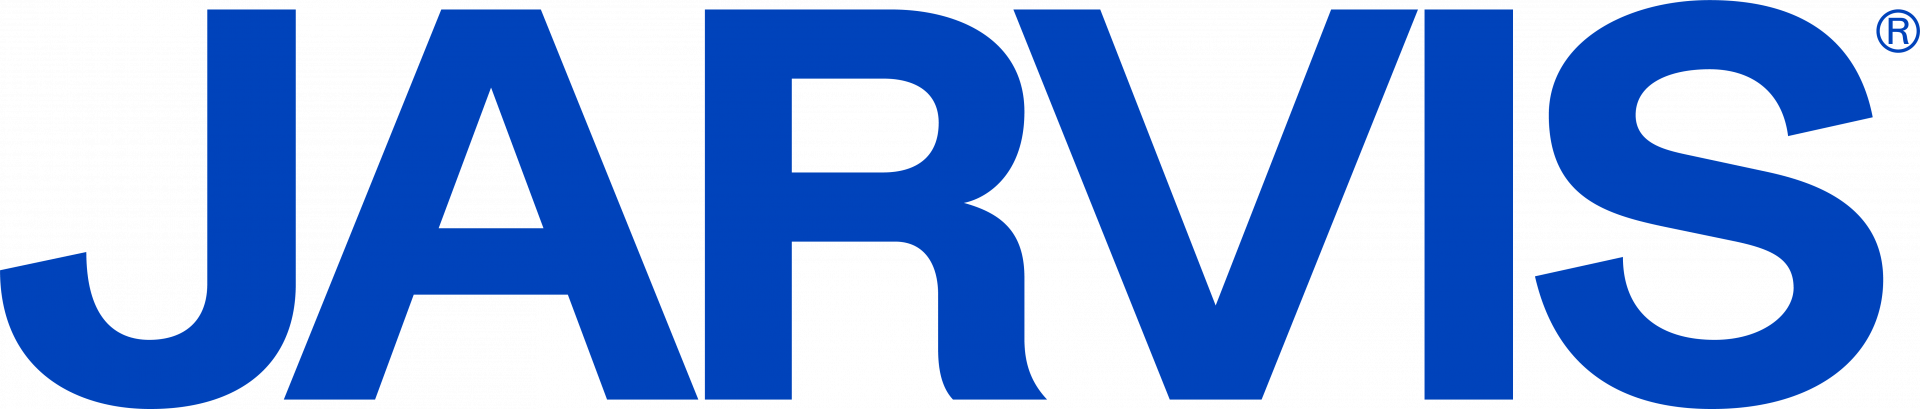 JARVIS logo